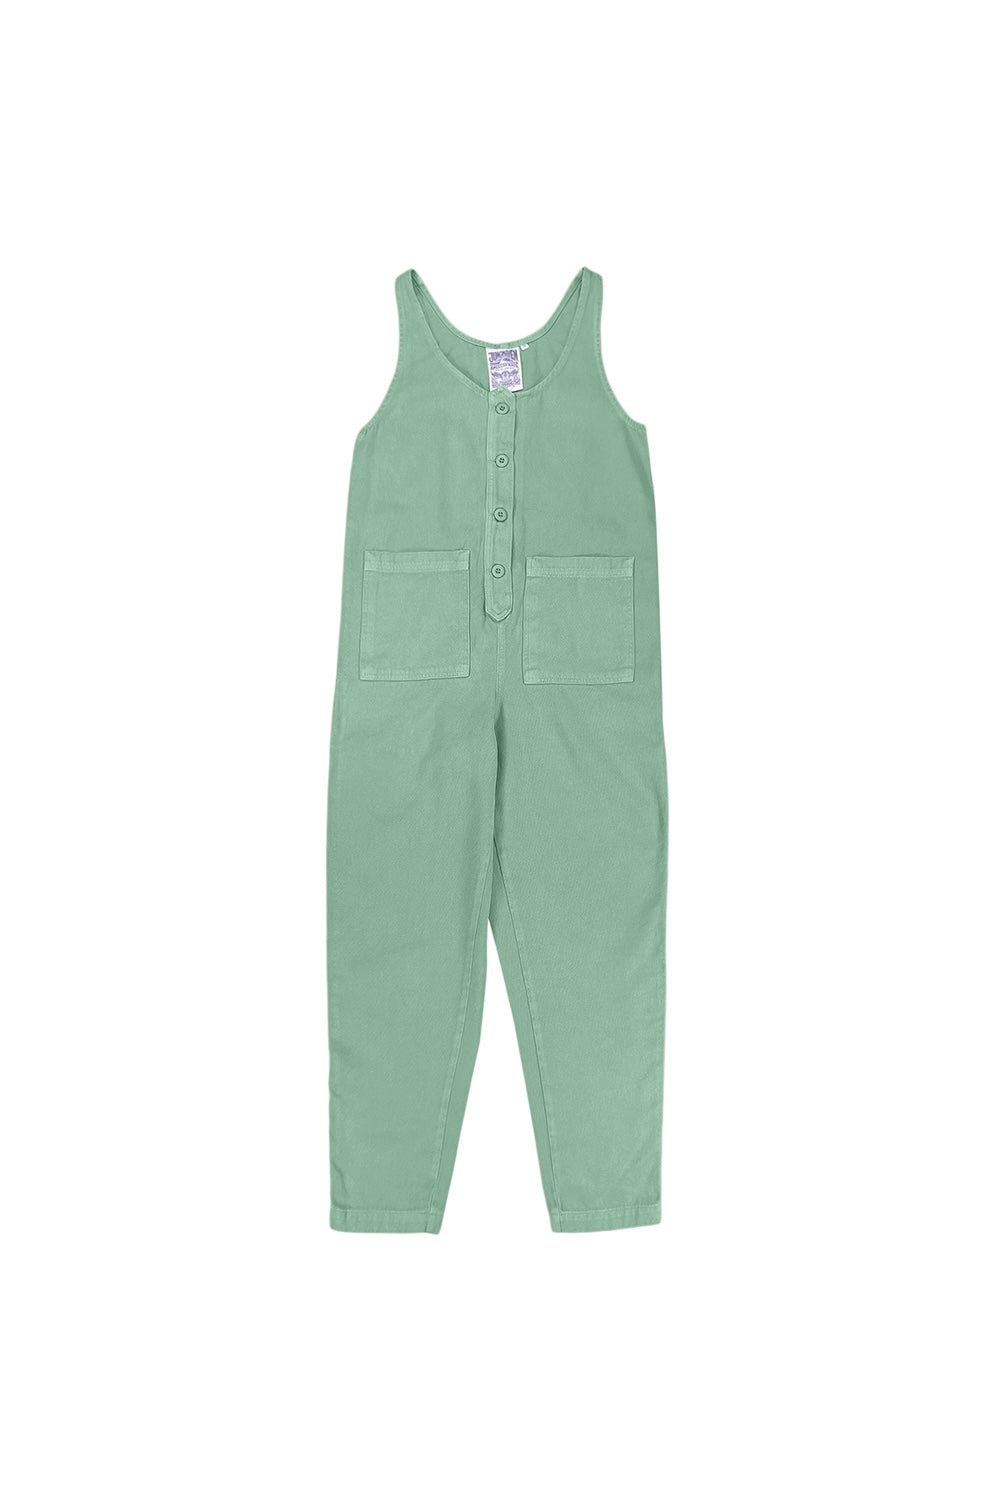 Button Front Jumper | Jungmaven Hemp Clothing & Accessories / Color: Sage Green